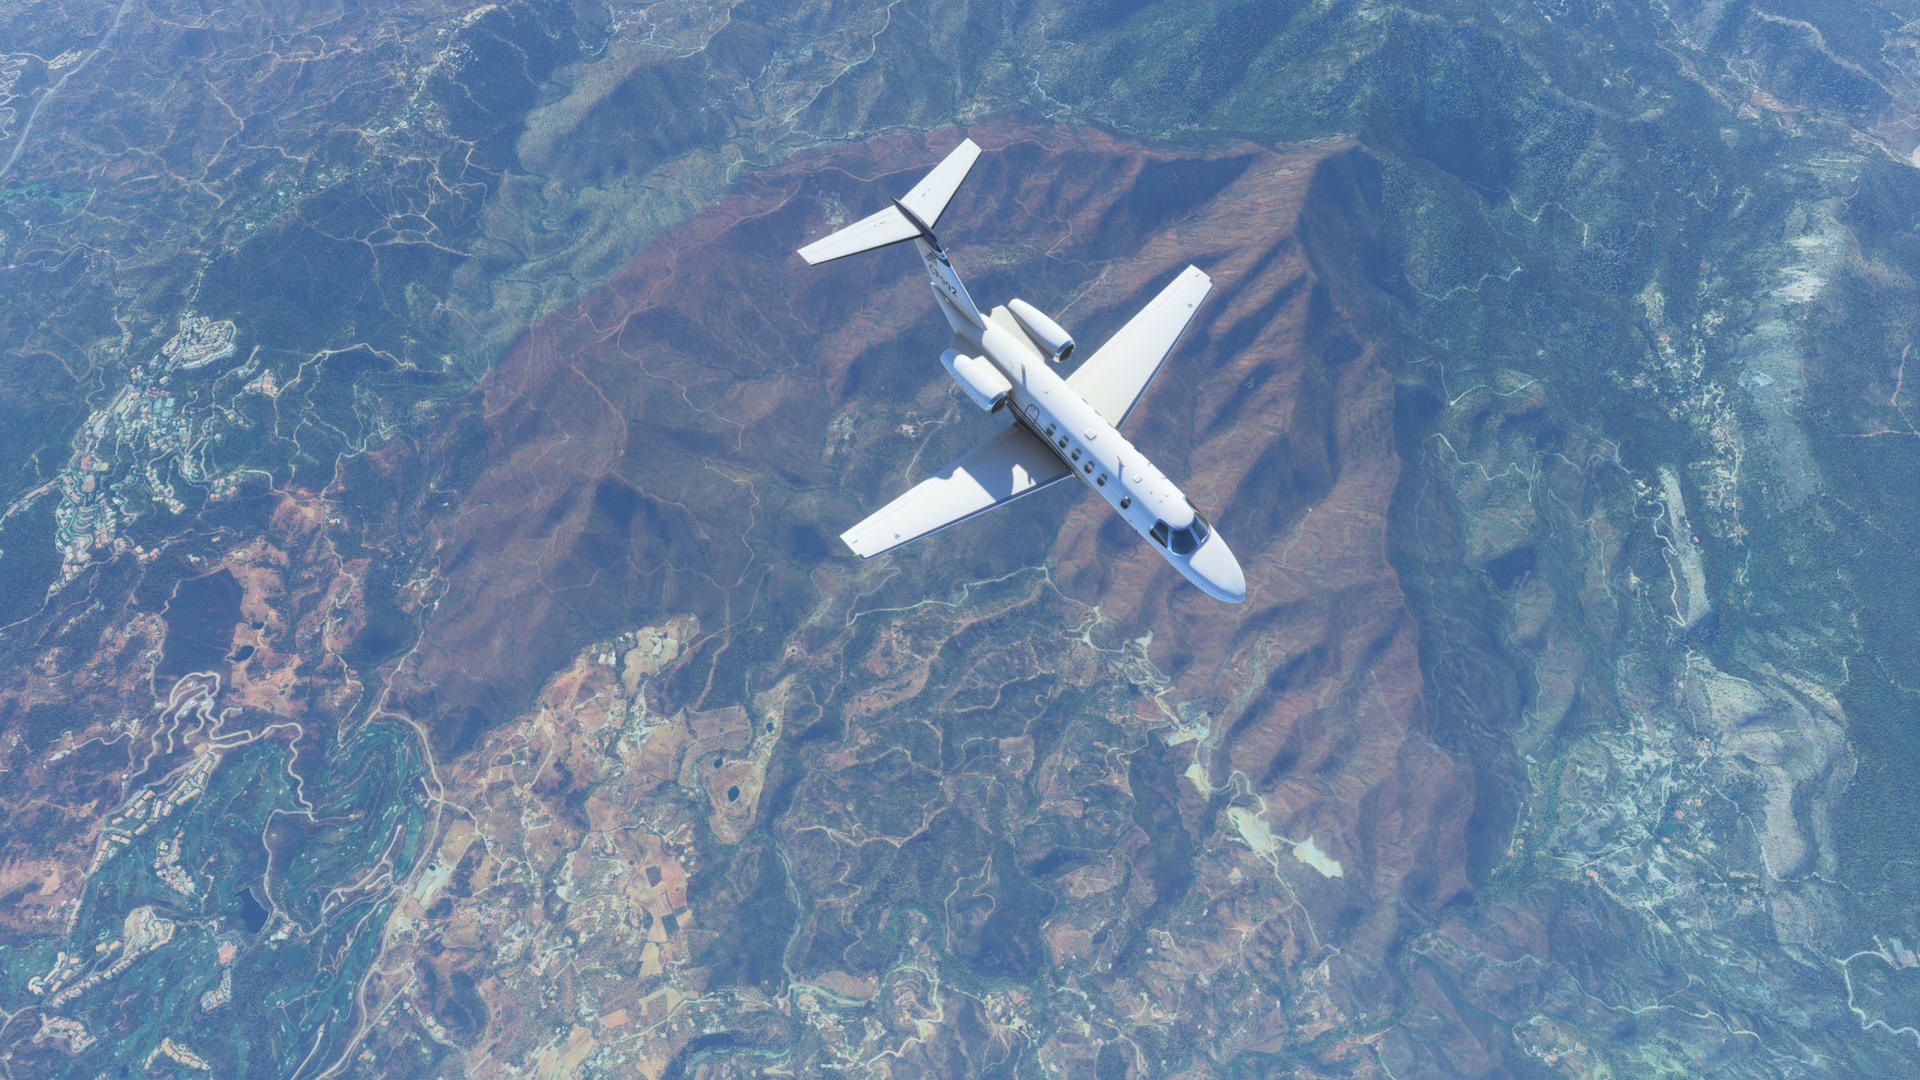 Flying over the mountains near Malaga in Spain on a CJ4 | Microsoft Flight Simulator